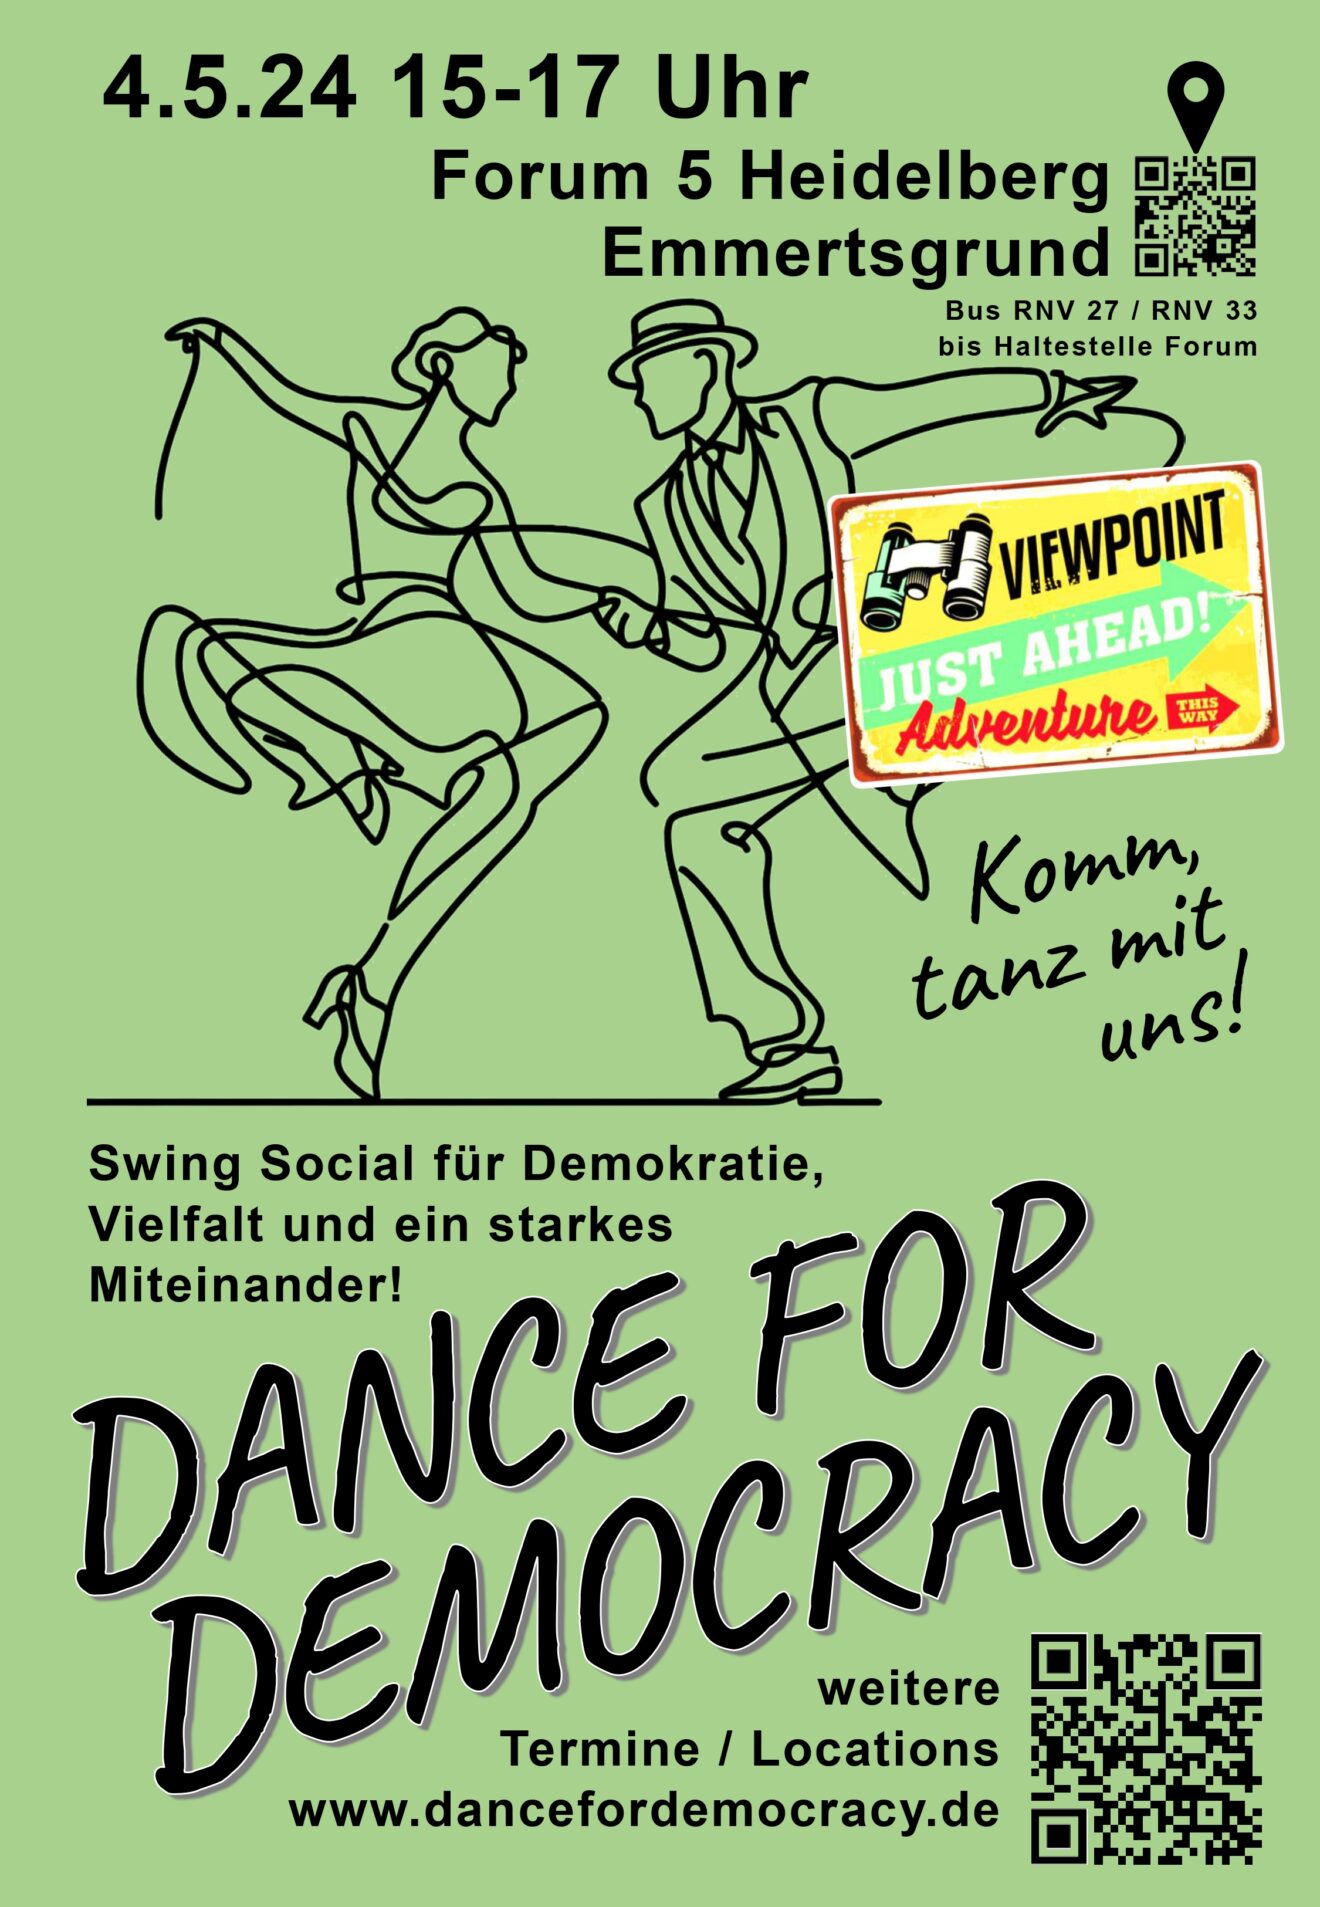 Dance for Democracy bittet den Berg zum Tanz!